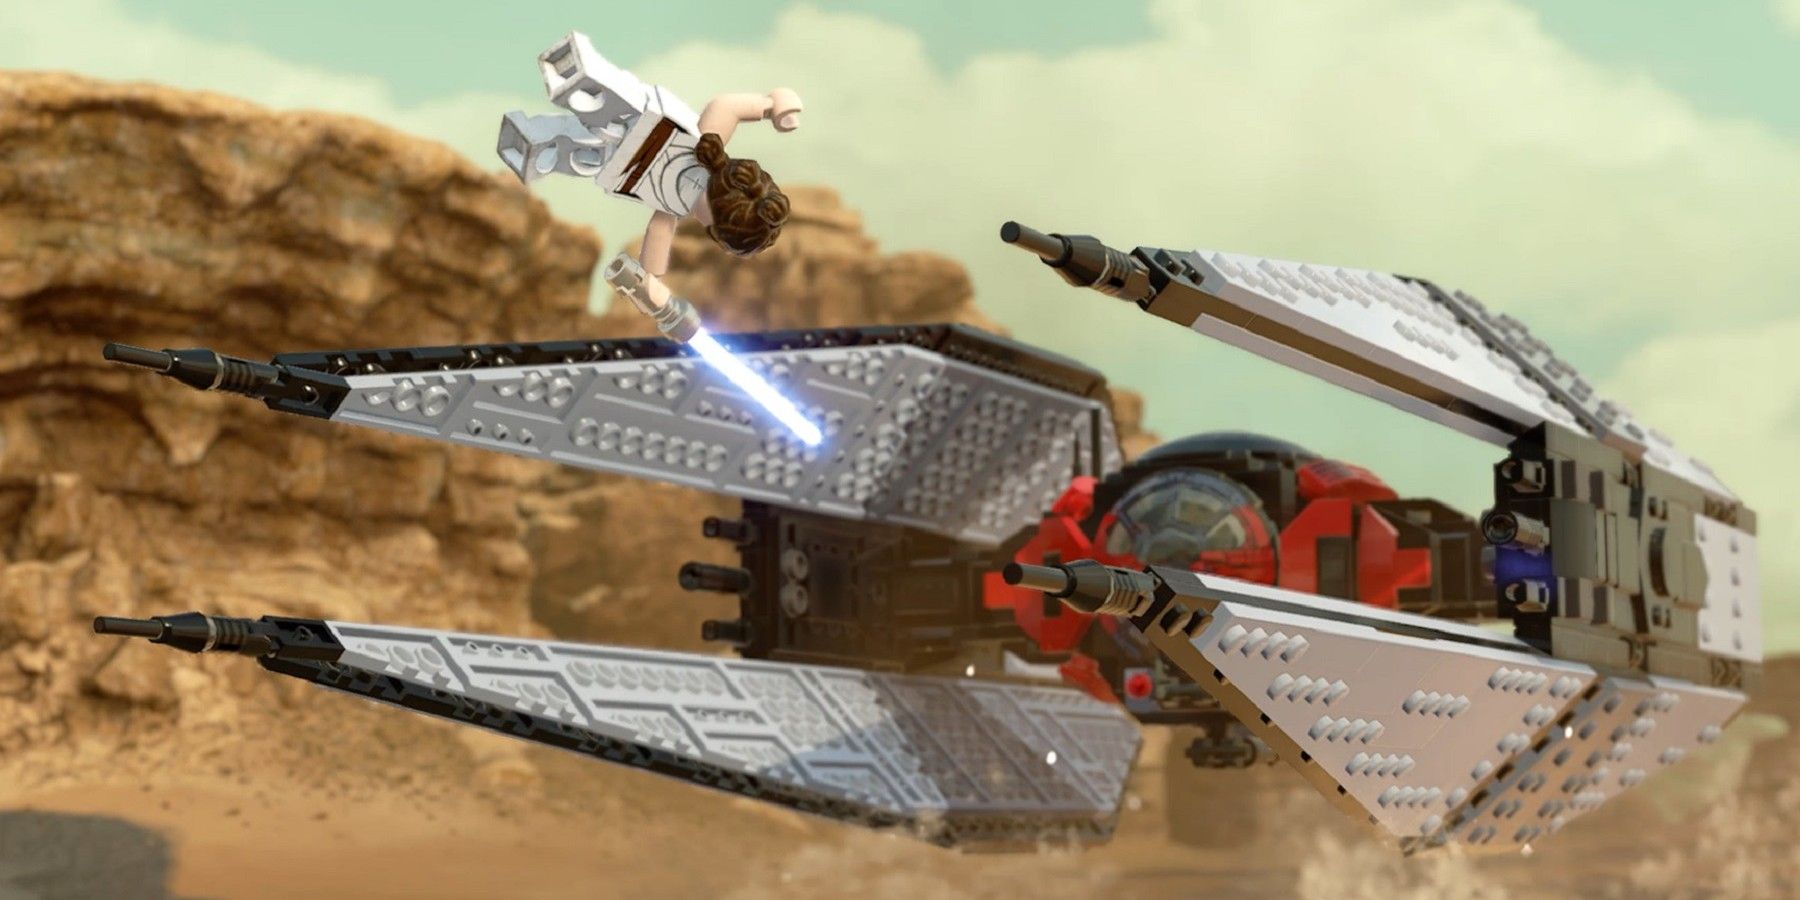 Lego Star Wars The Skywalker Saga Co-op Guide 